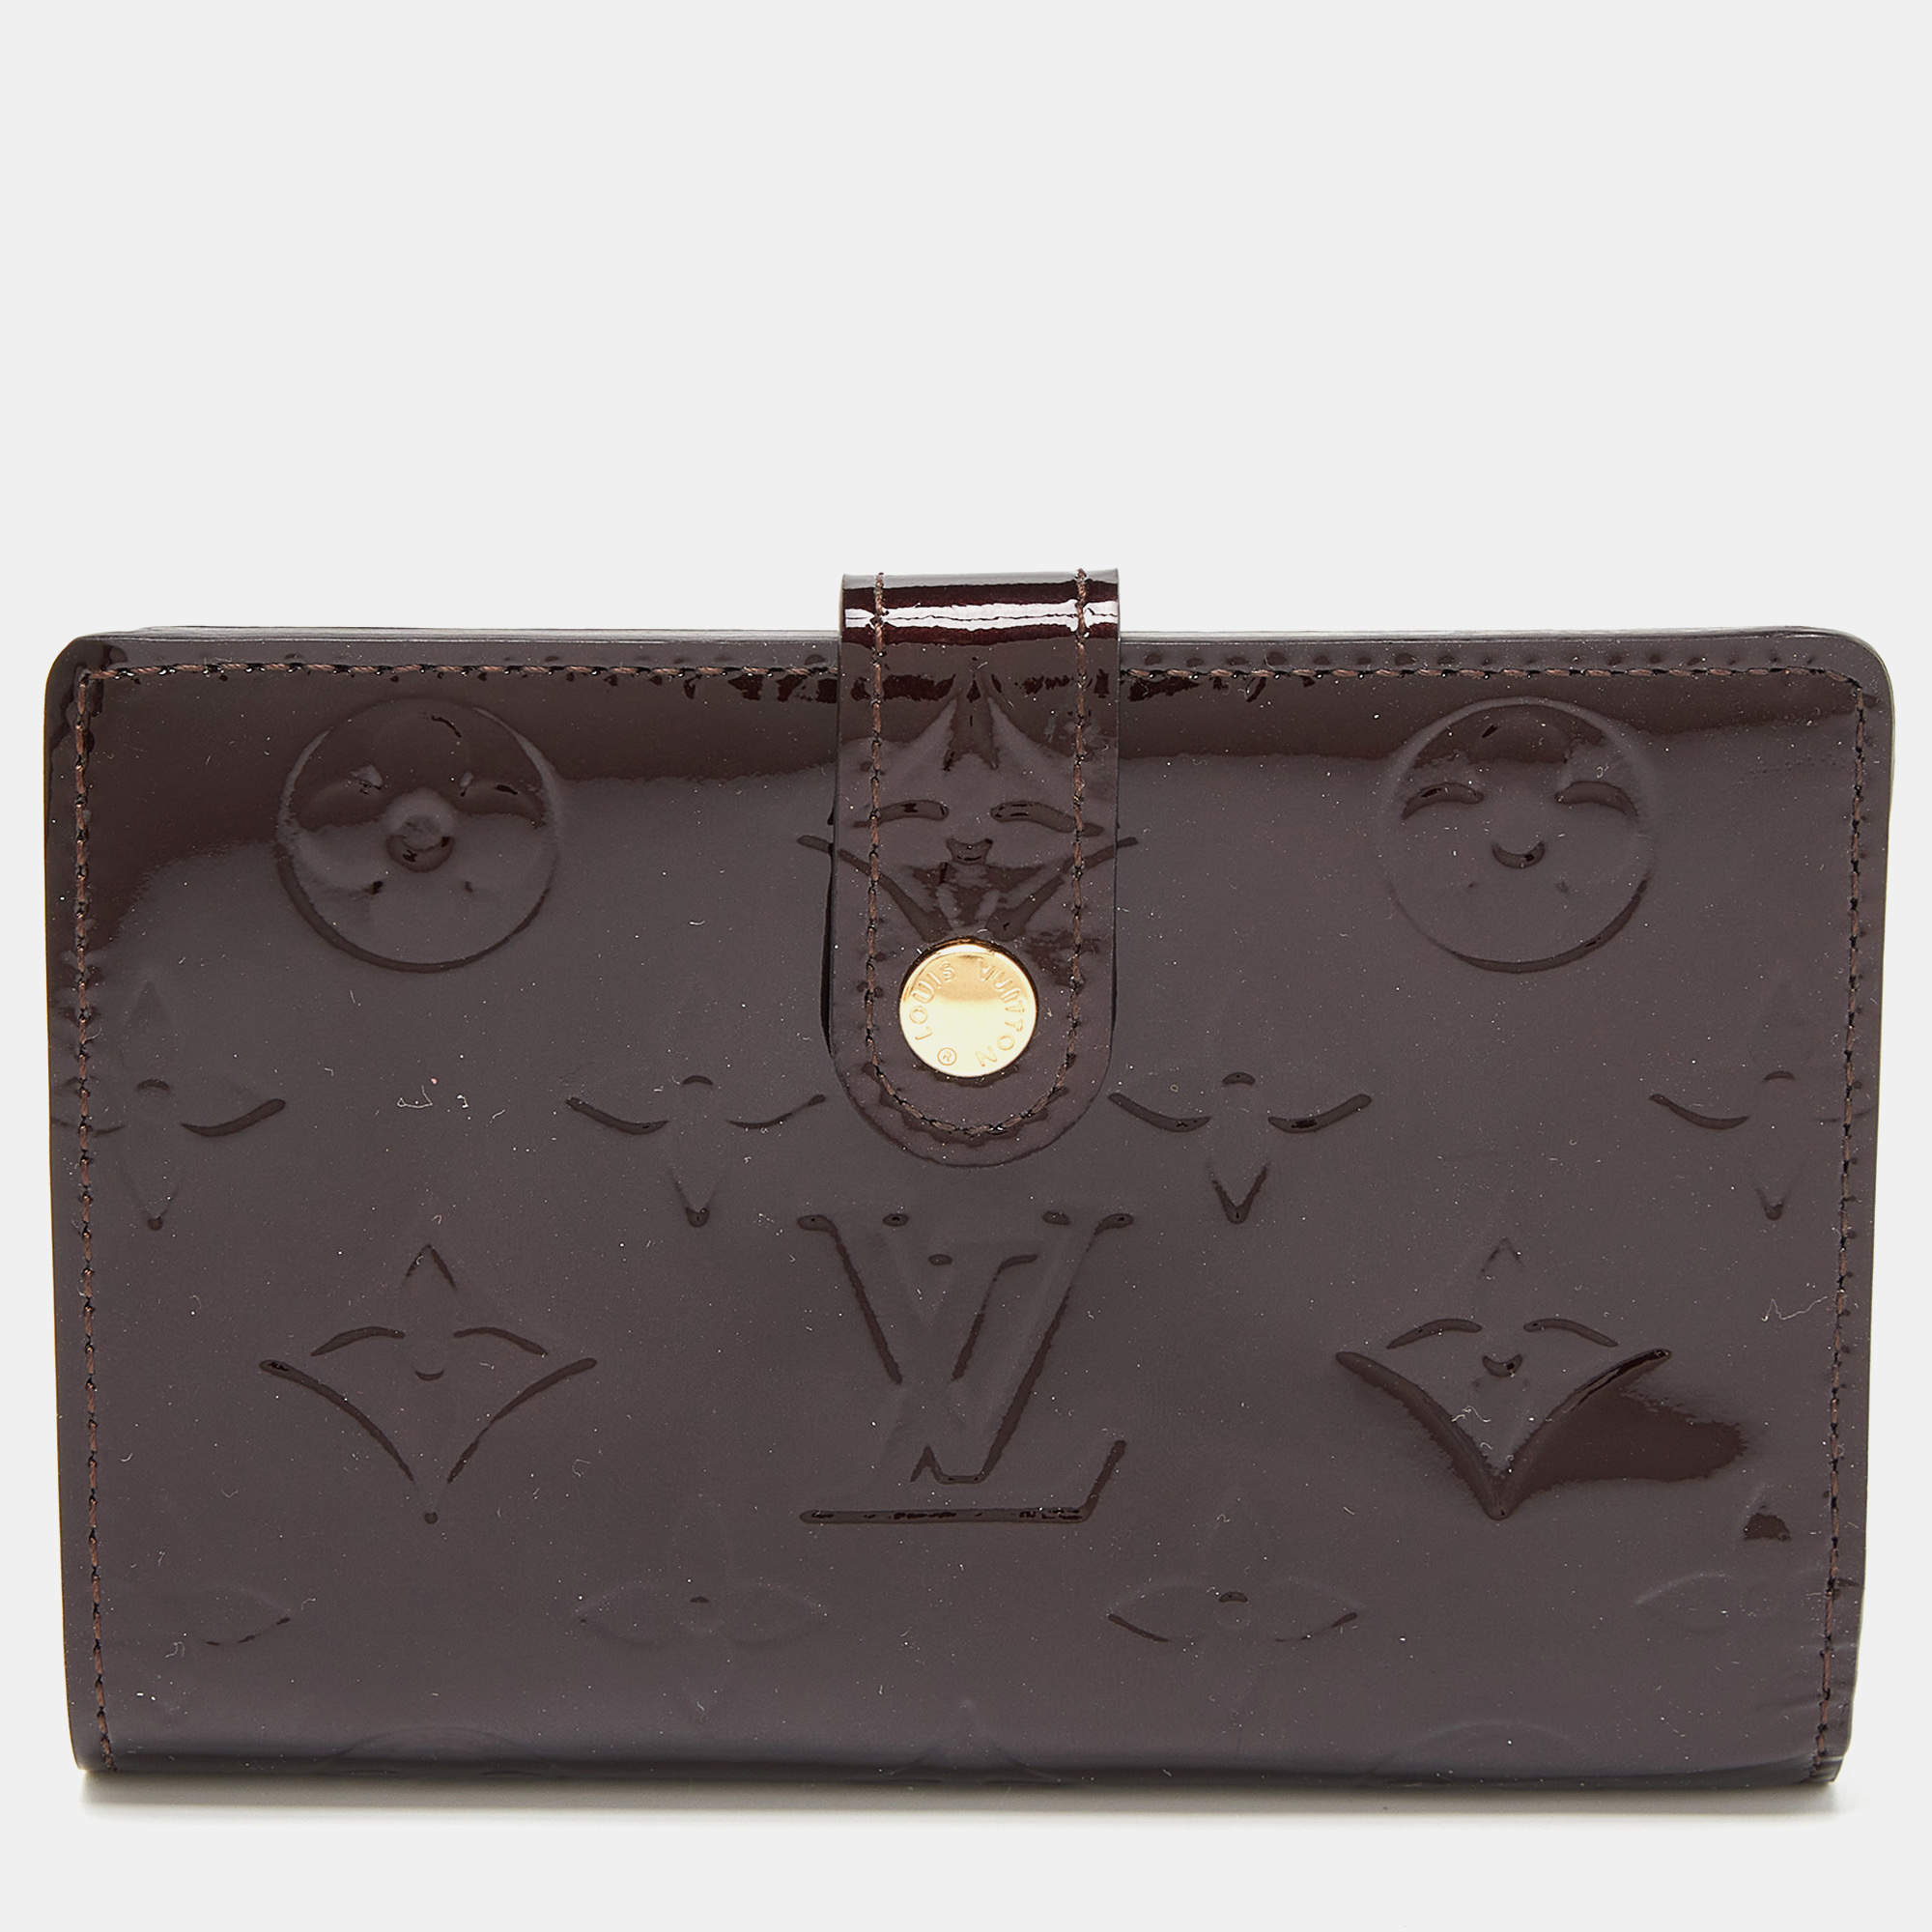 Authentic Louis Vuitton Gray Monogram Matt Vernis Wallet Excellent Used